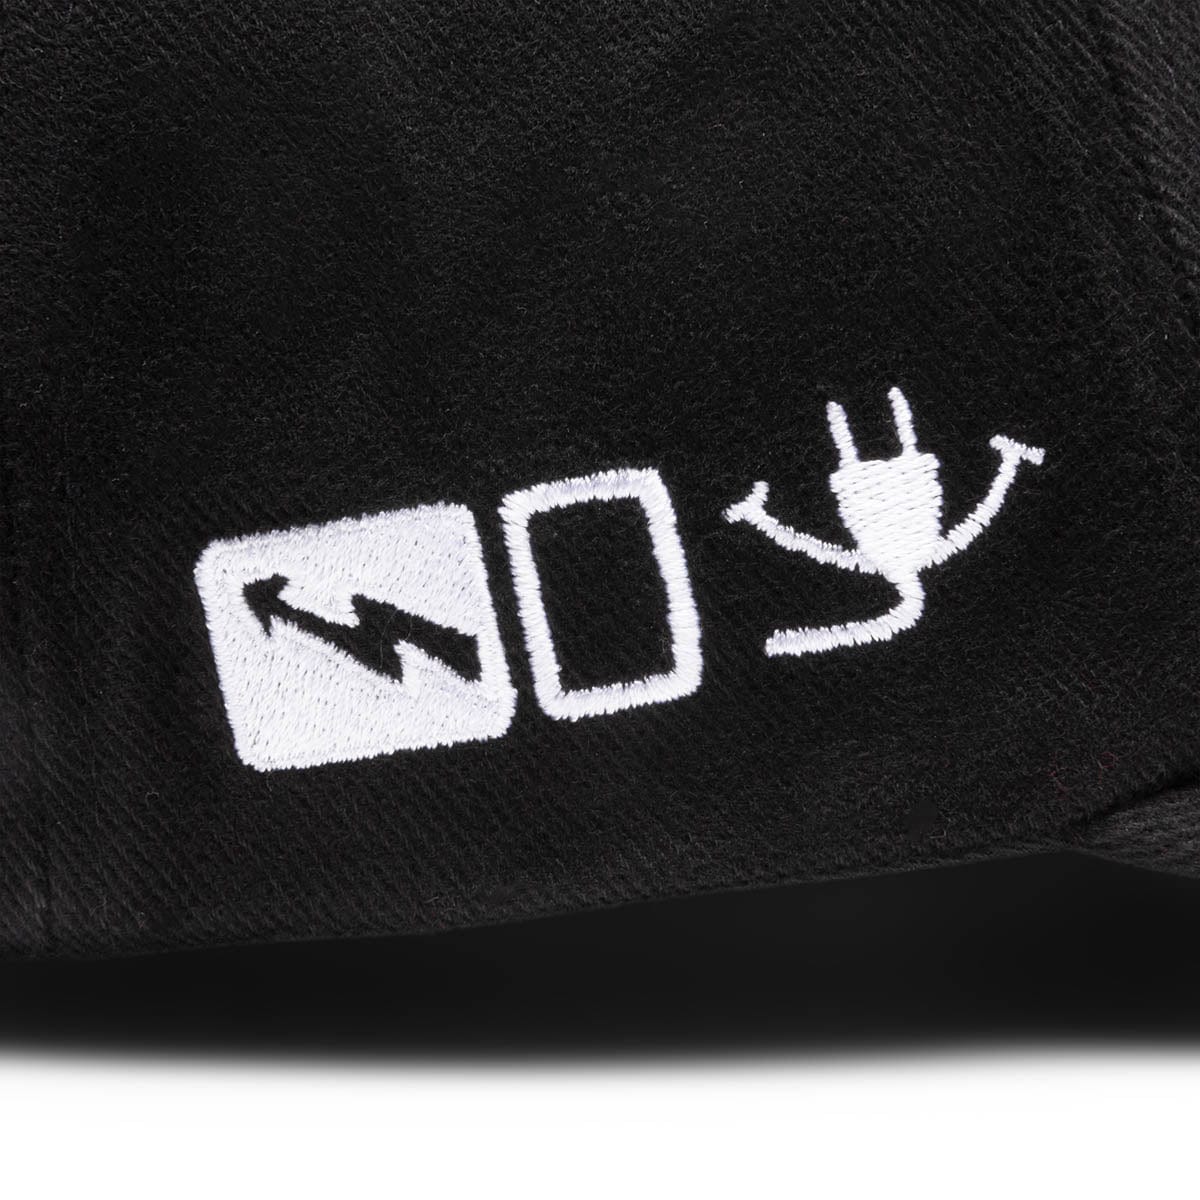 Cav Empt Headwear BLACK / O/S CHARGING CAP